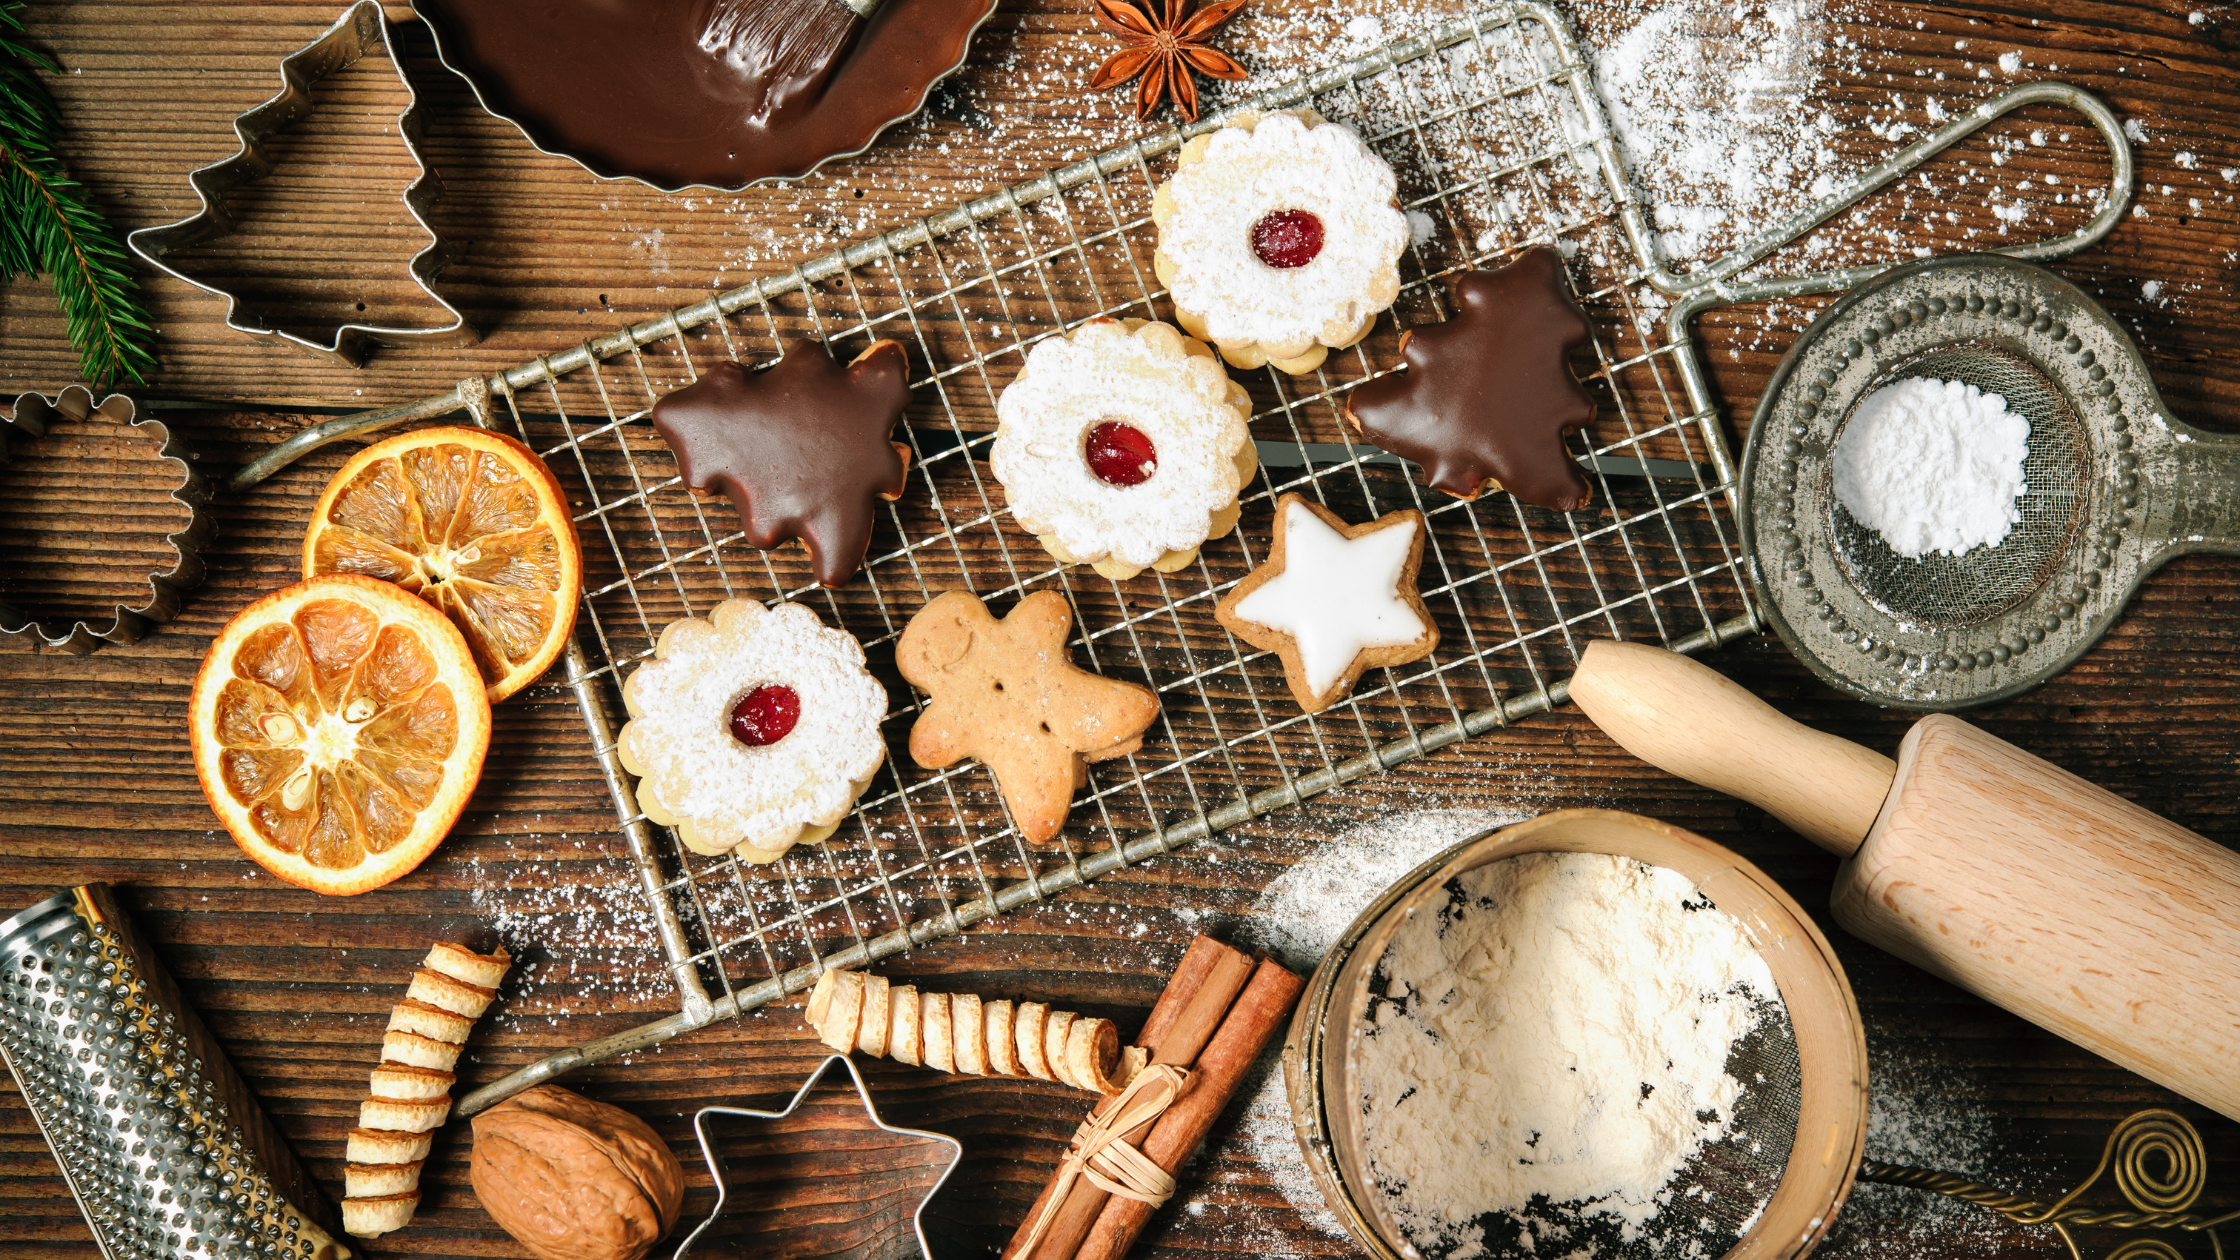 Freshly baked healthy-looking holiday treats 